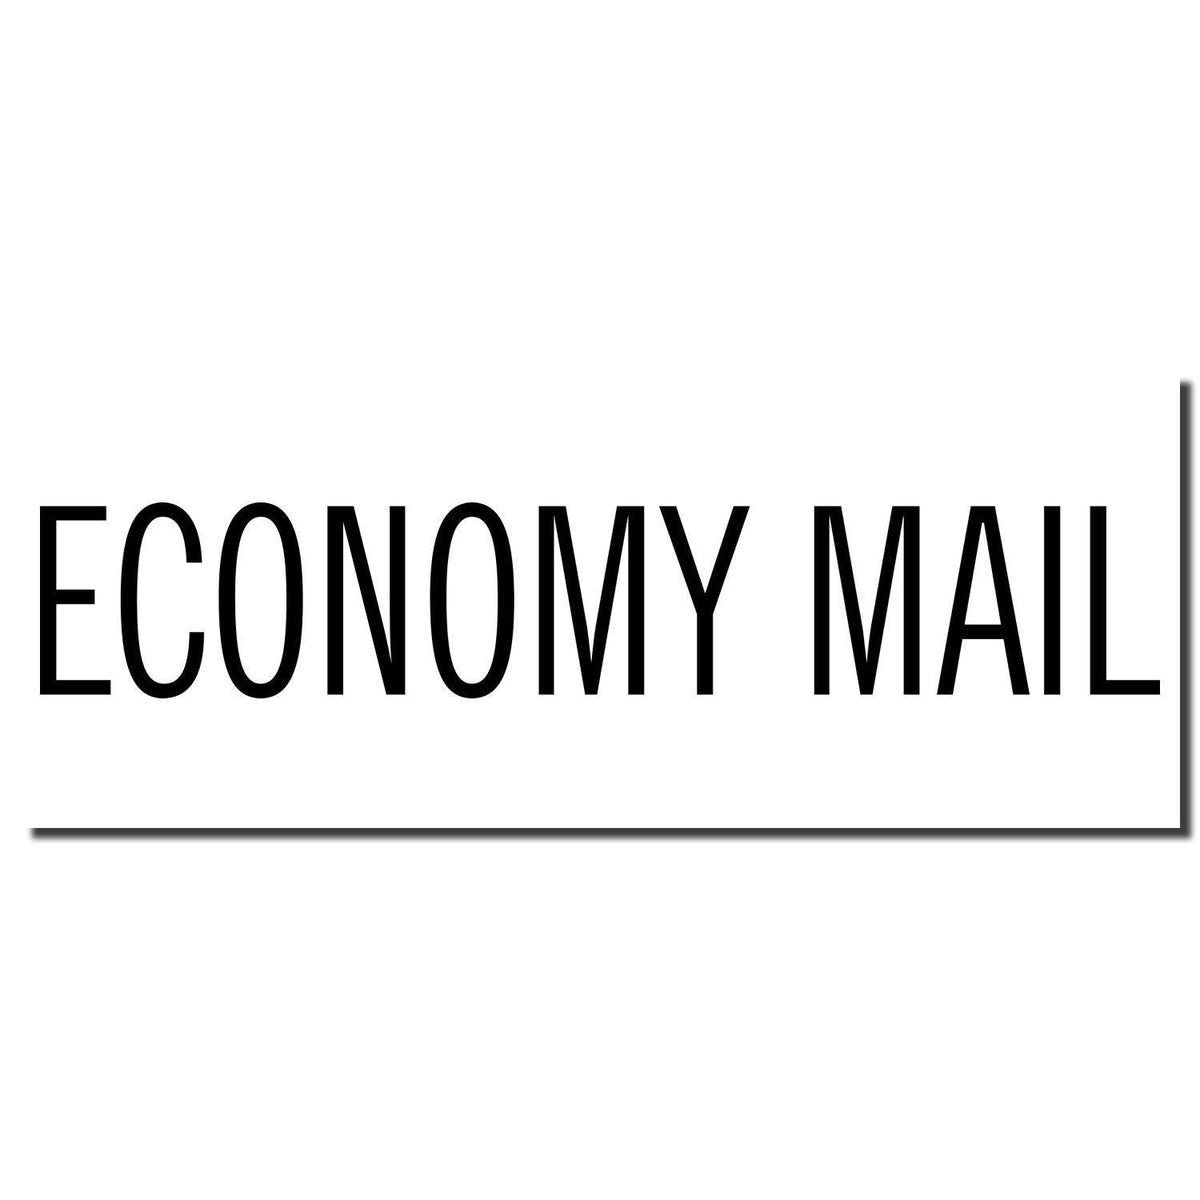 Enlarged Imprint Slim Pre-Inked Economy Mail Stamp Sample